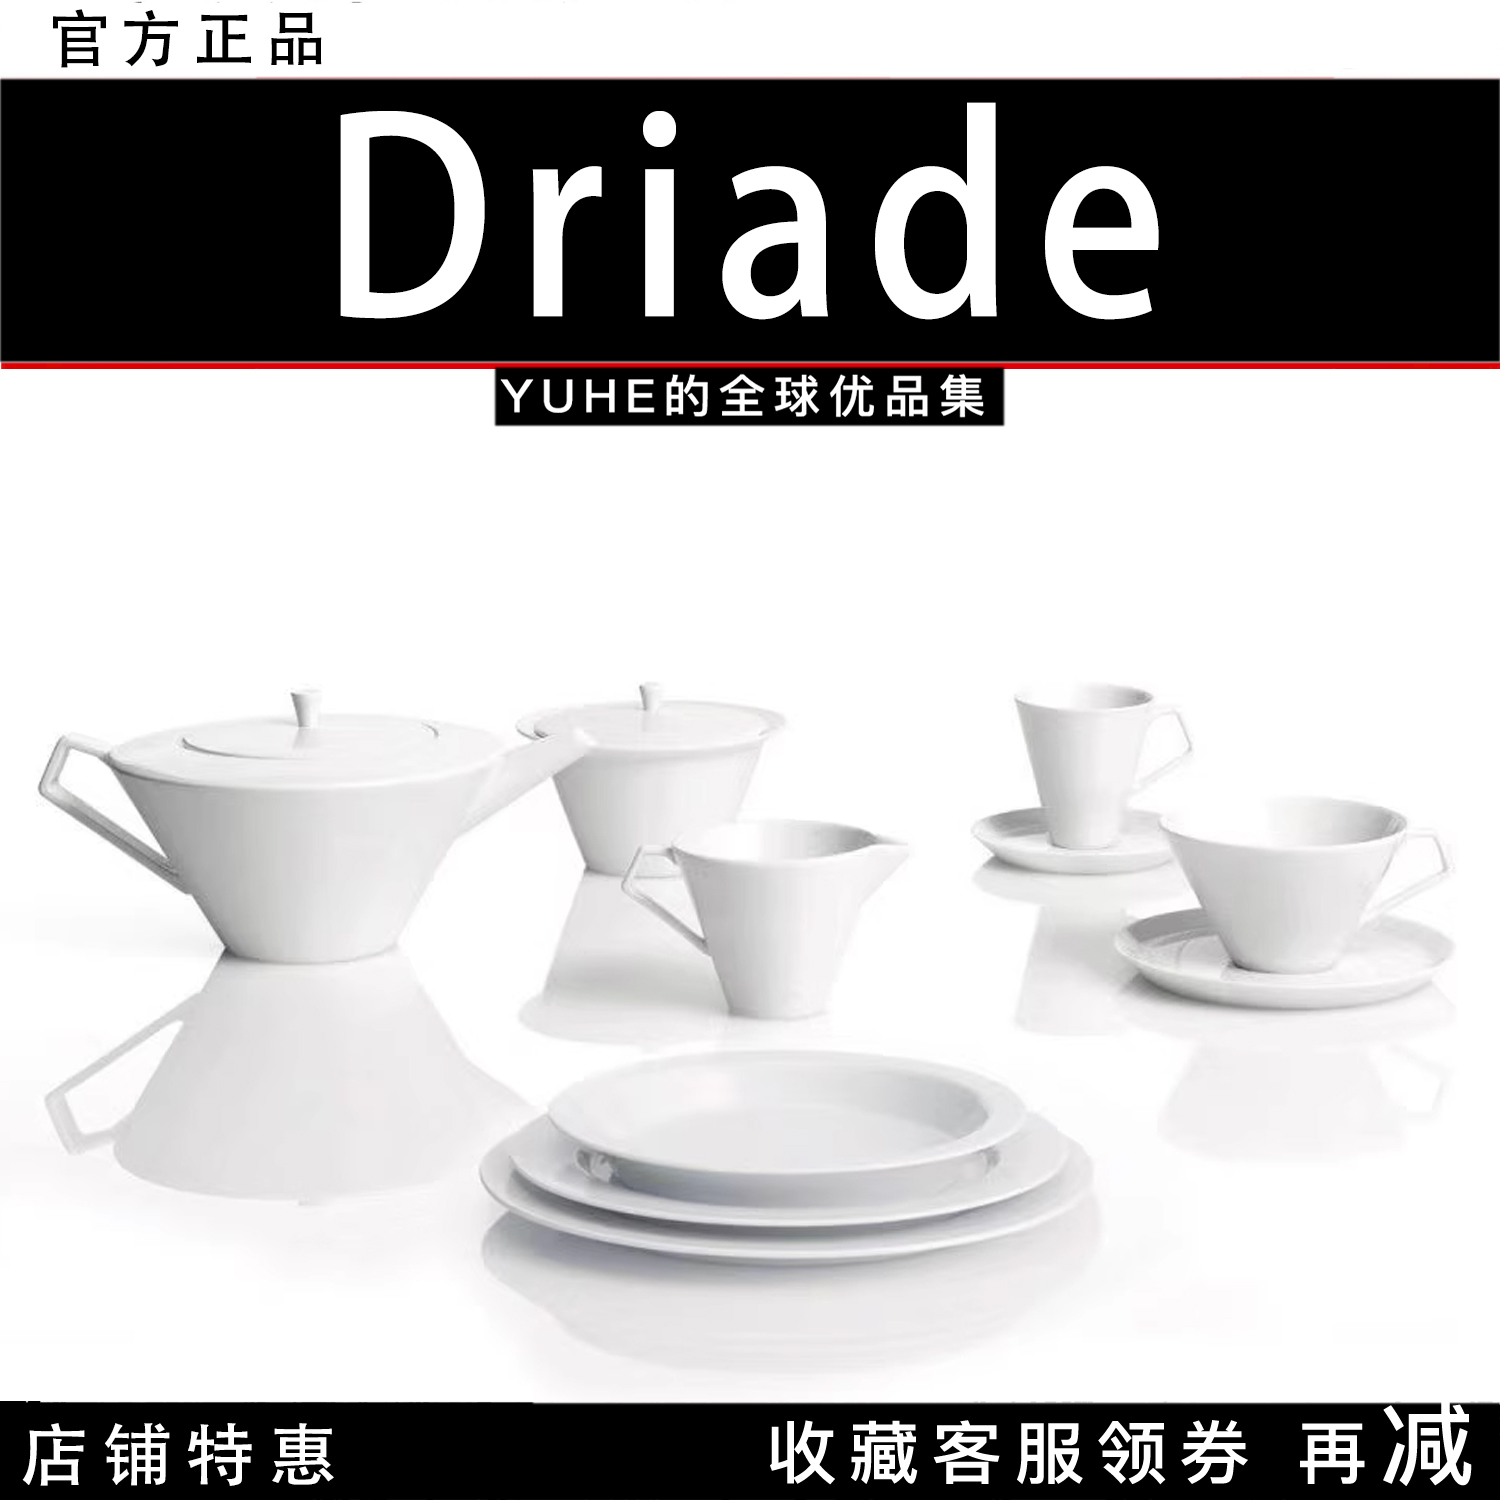 意大利Driade白瓷餐具